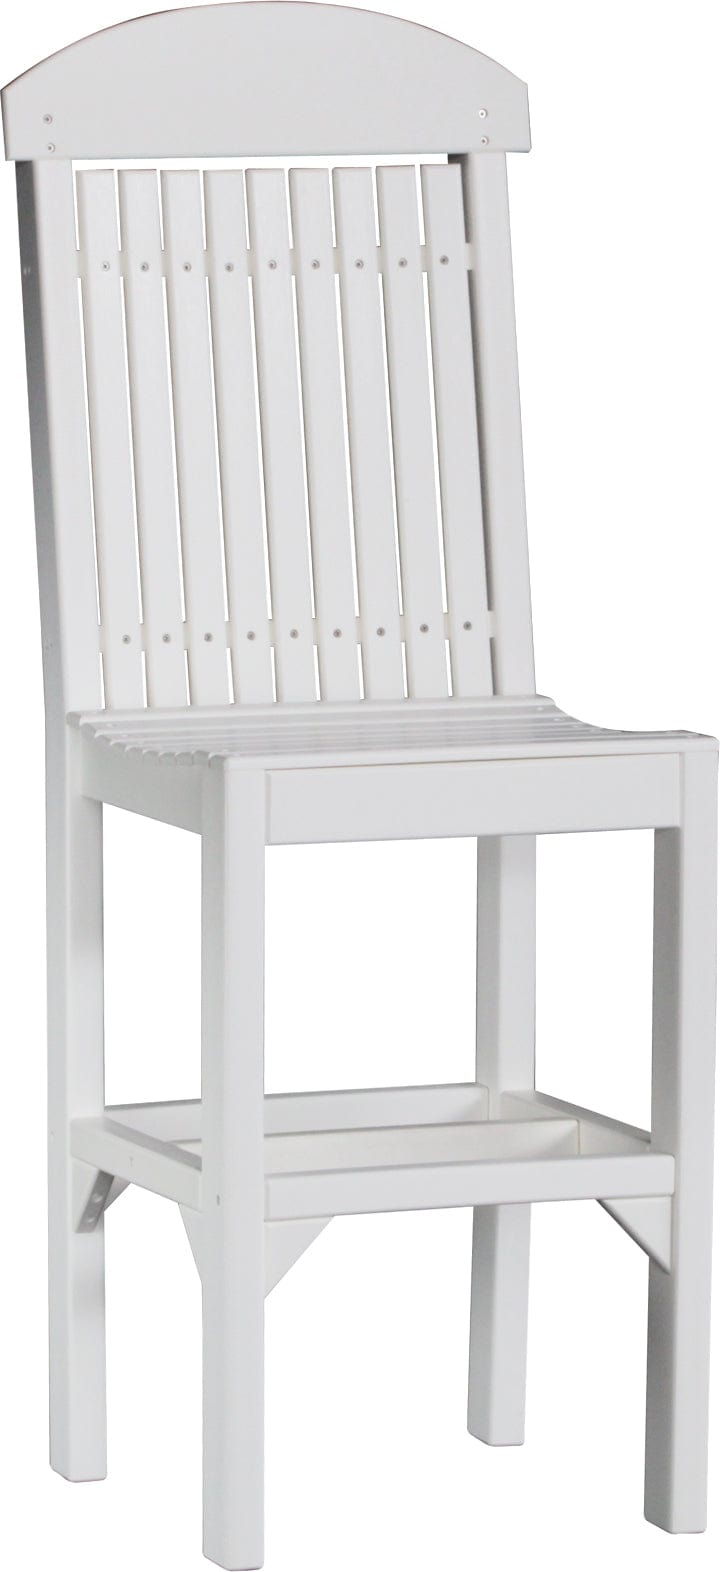 LuxCraft Poly Regular Chair Bar Height PRCB